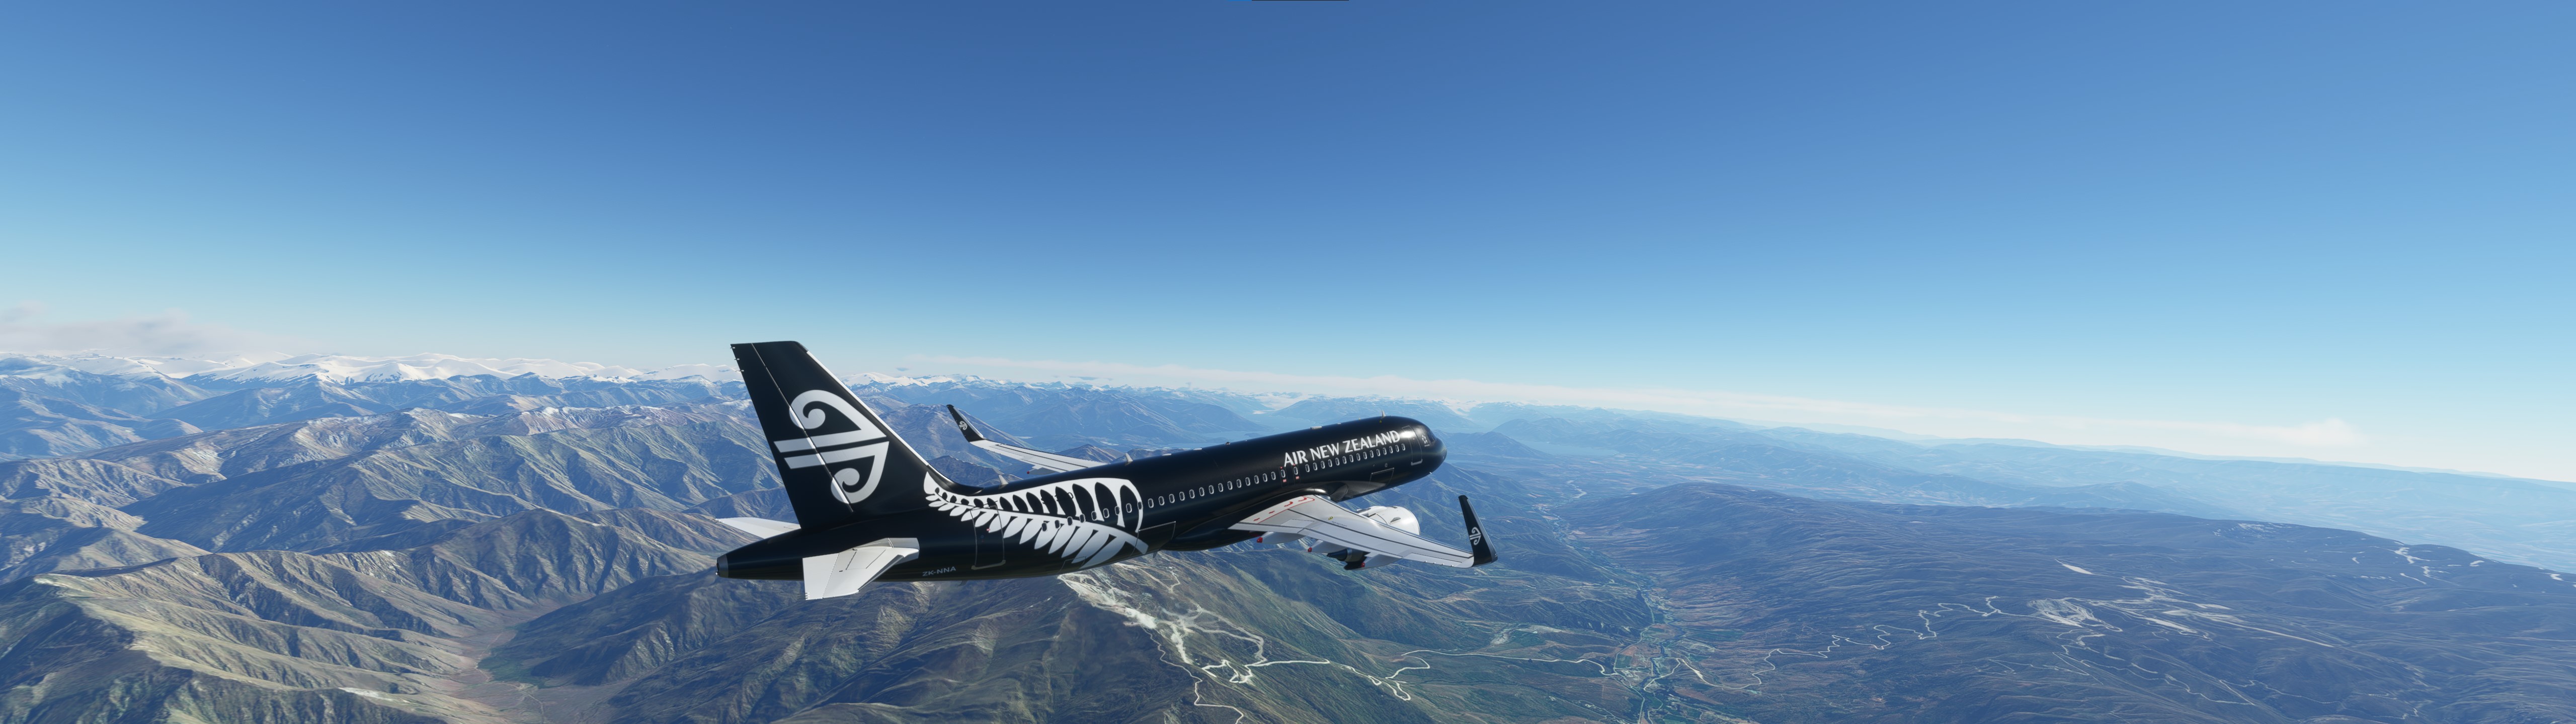 Flight Simulator Airbus A320 Aircraft Airplane New Zealand 5120x1440